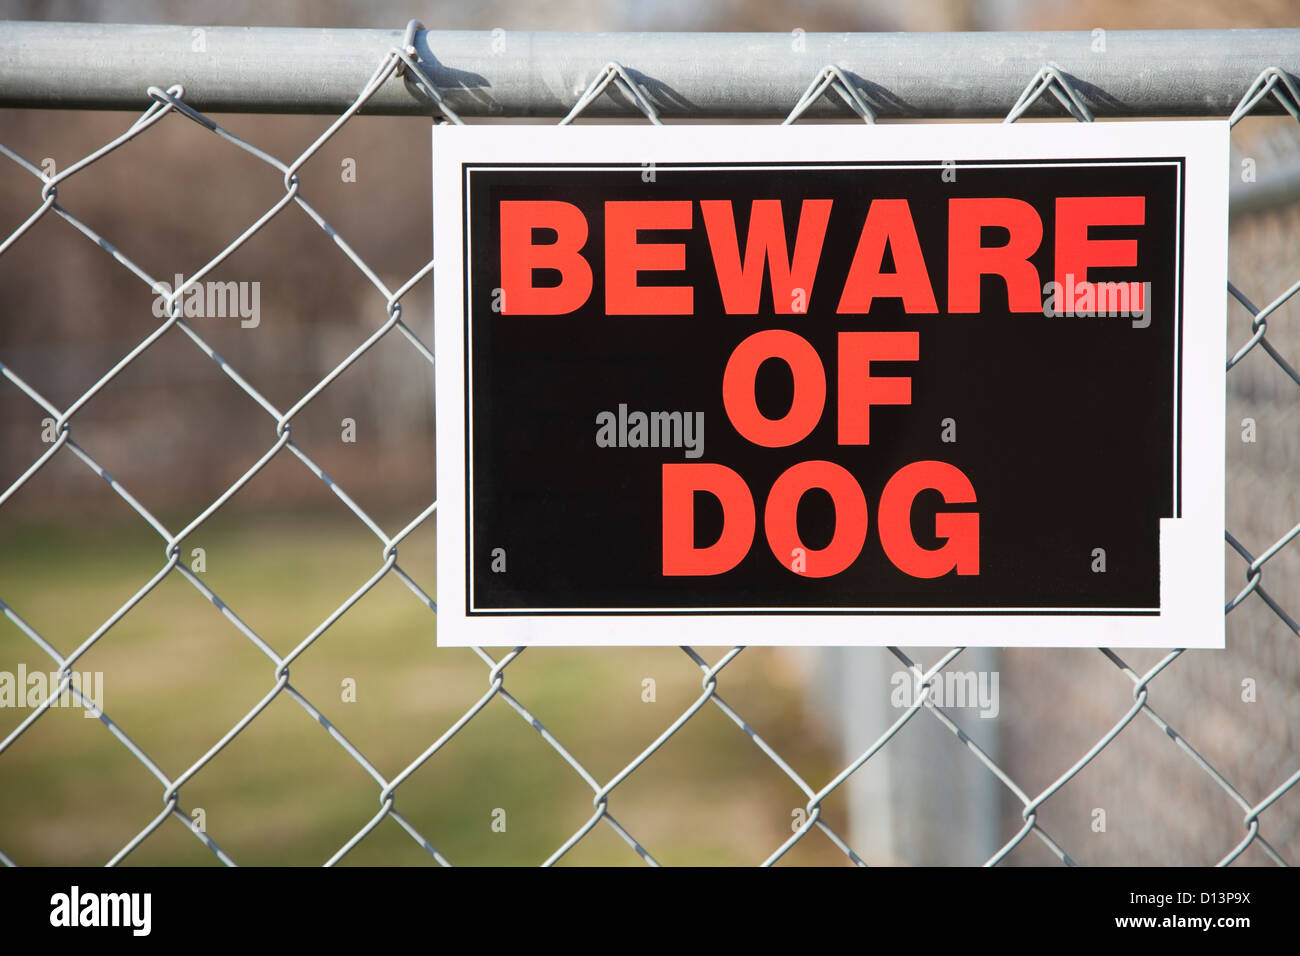 USA, Illinois, Metamora, Beware of dog sign Stock Photo